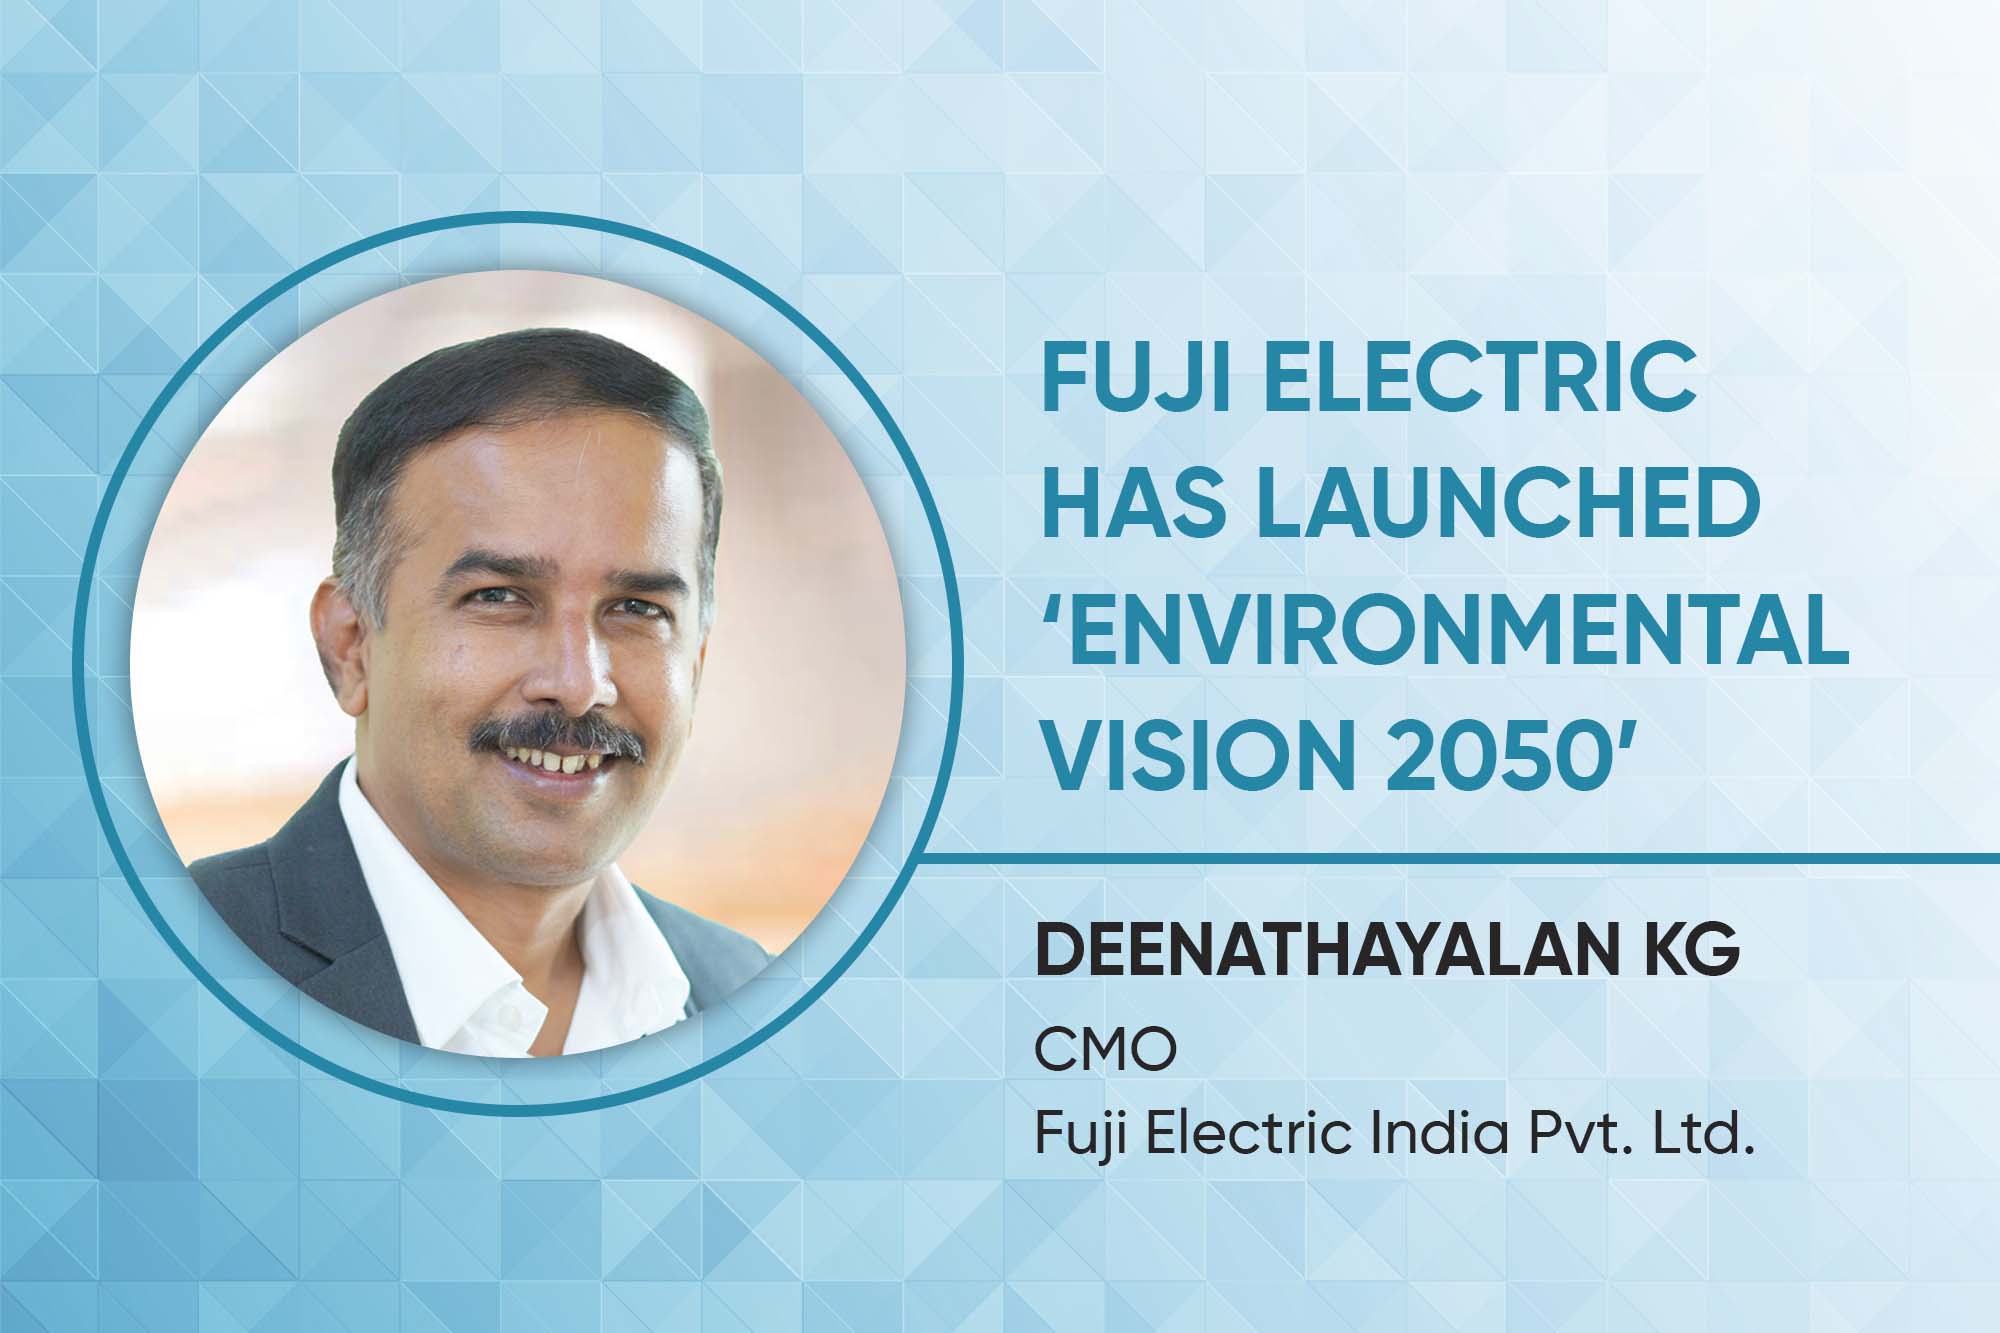 Fuji Electric has launched ‘Environmental Vision 2050’